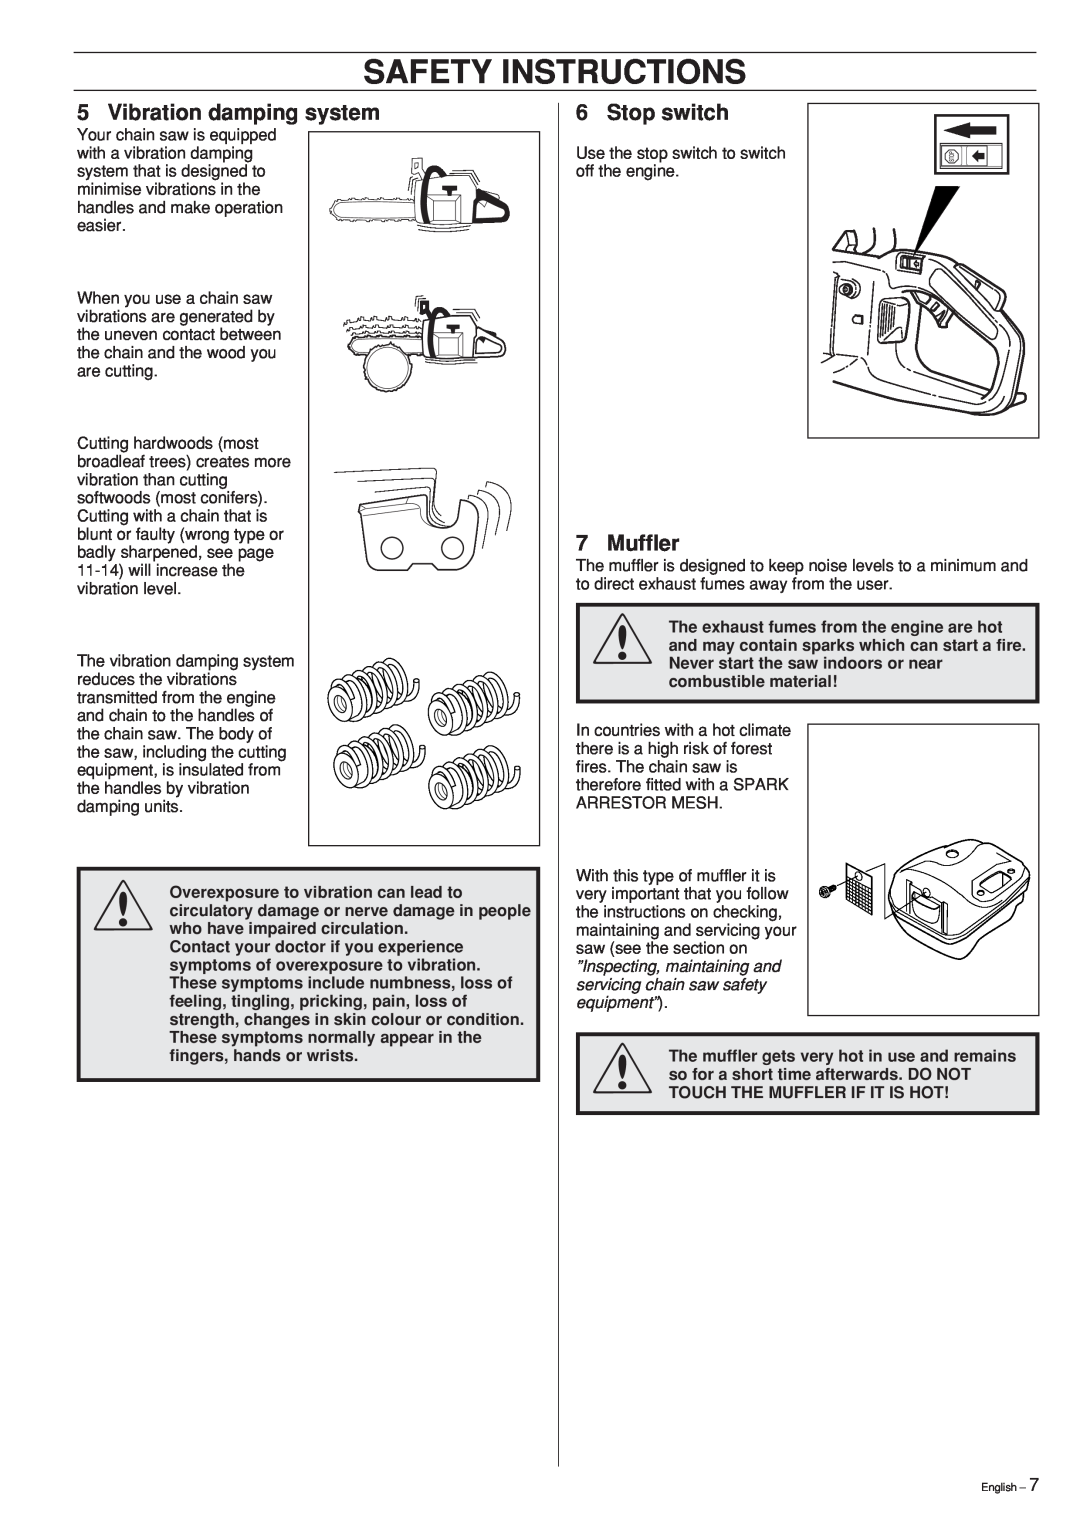 Husqvarna 339XP manual Vibration damping system, Stop switch, Muffler, Safety Instructions 